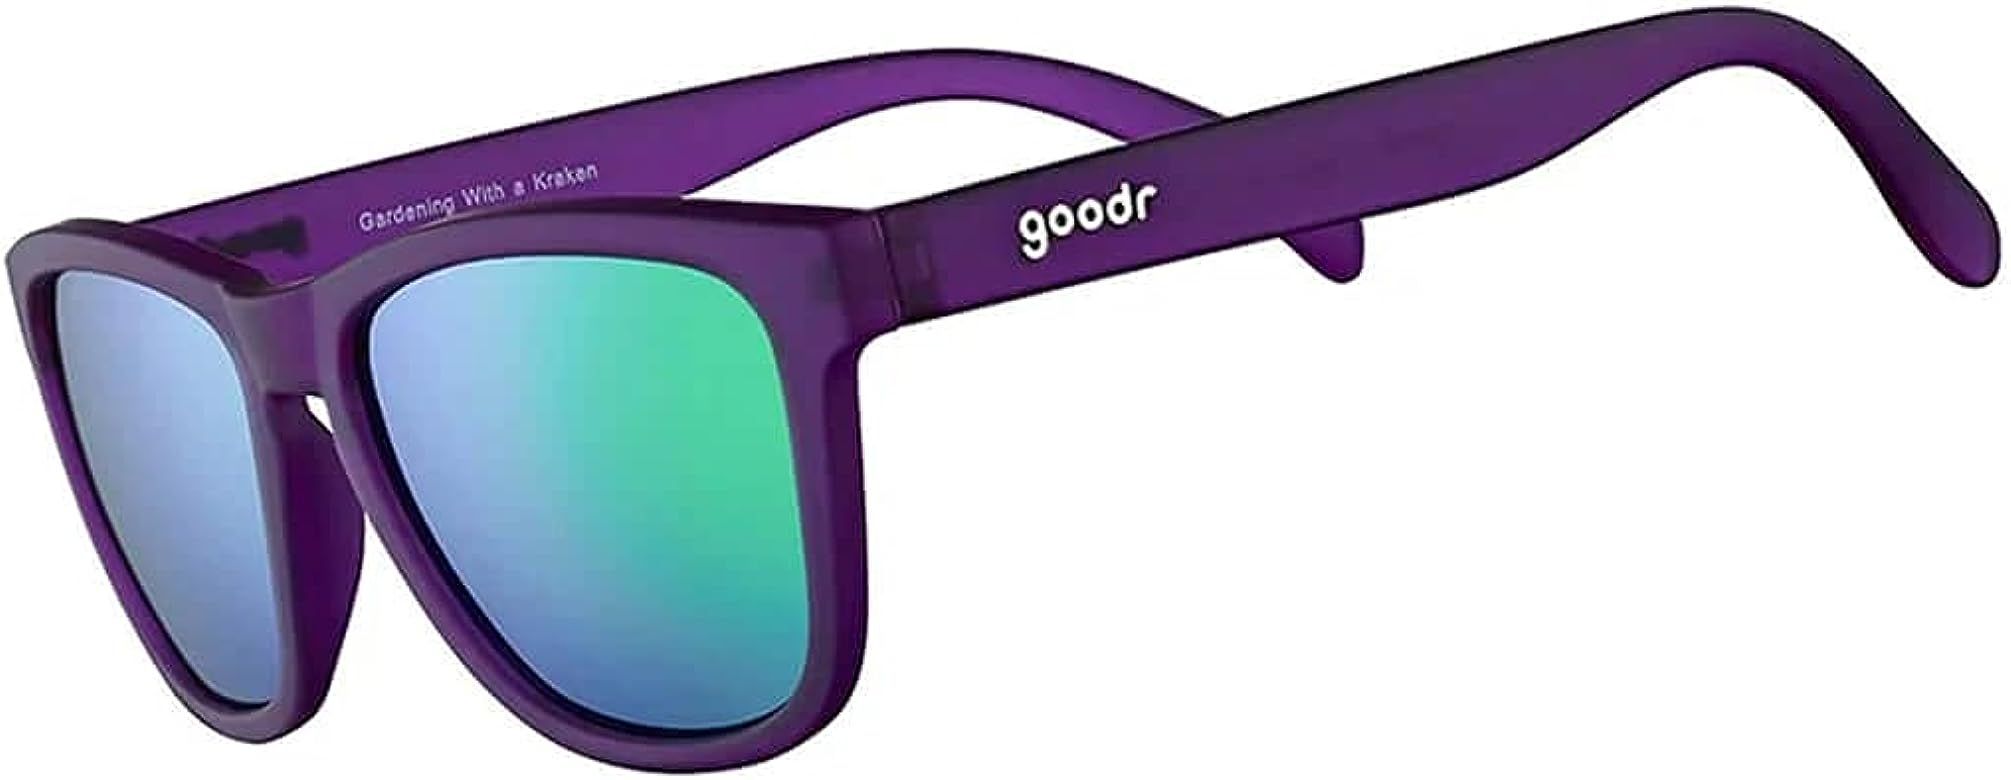 goodr RUNNING SUNGLASSES - (Purple w/Purple&Teal Lens) | Amazon (US)